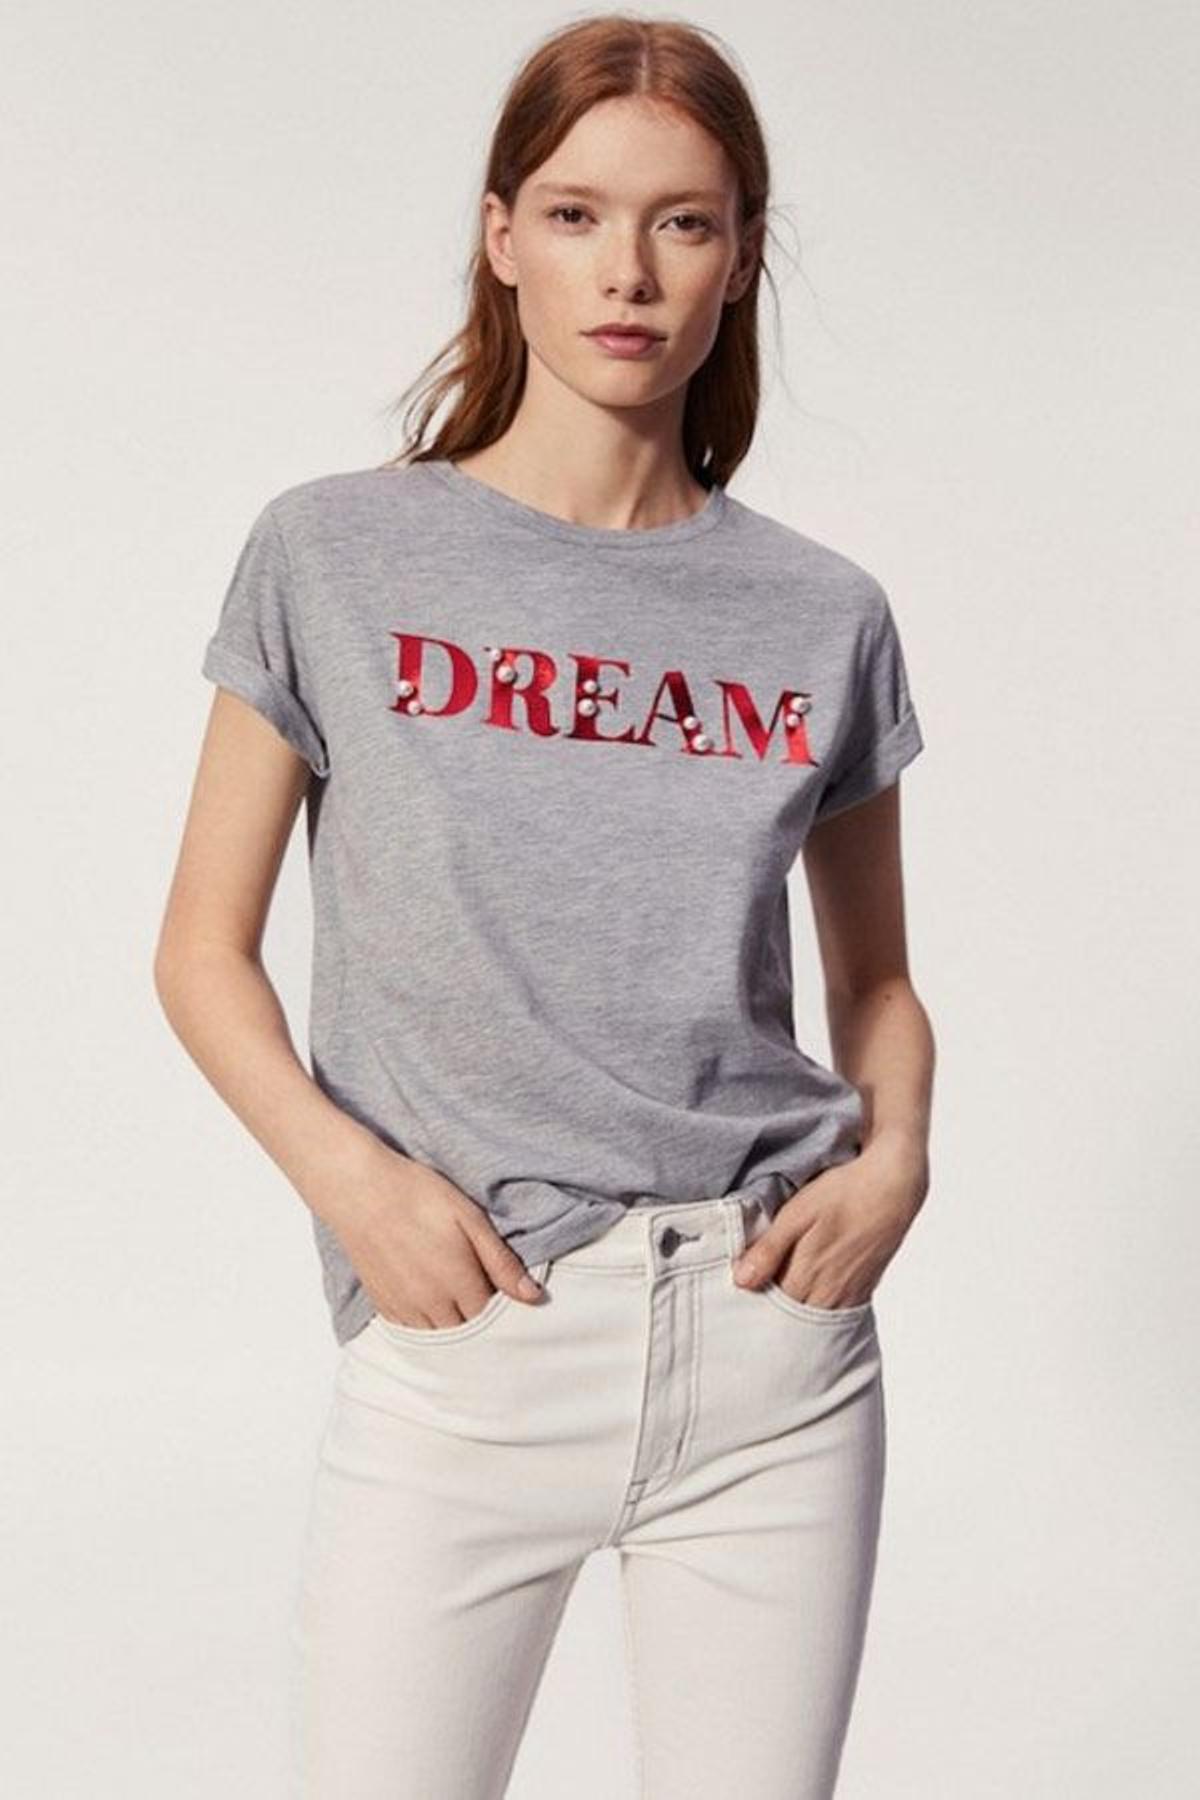 Camiseta con mensaje: Dream